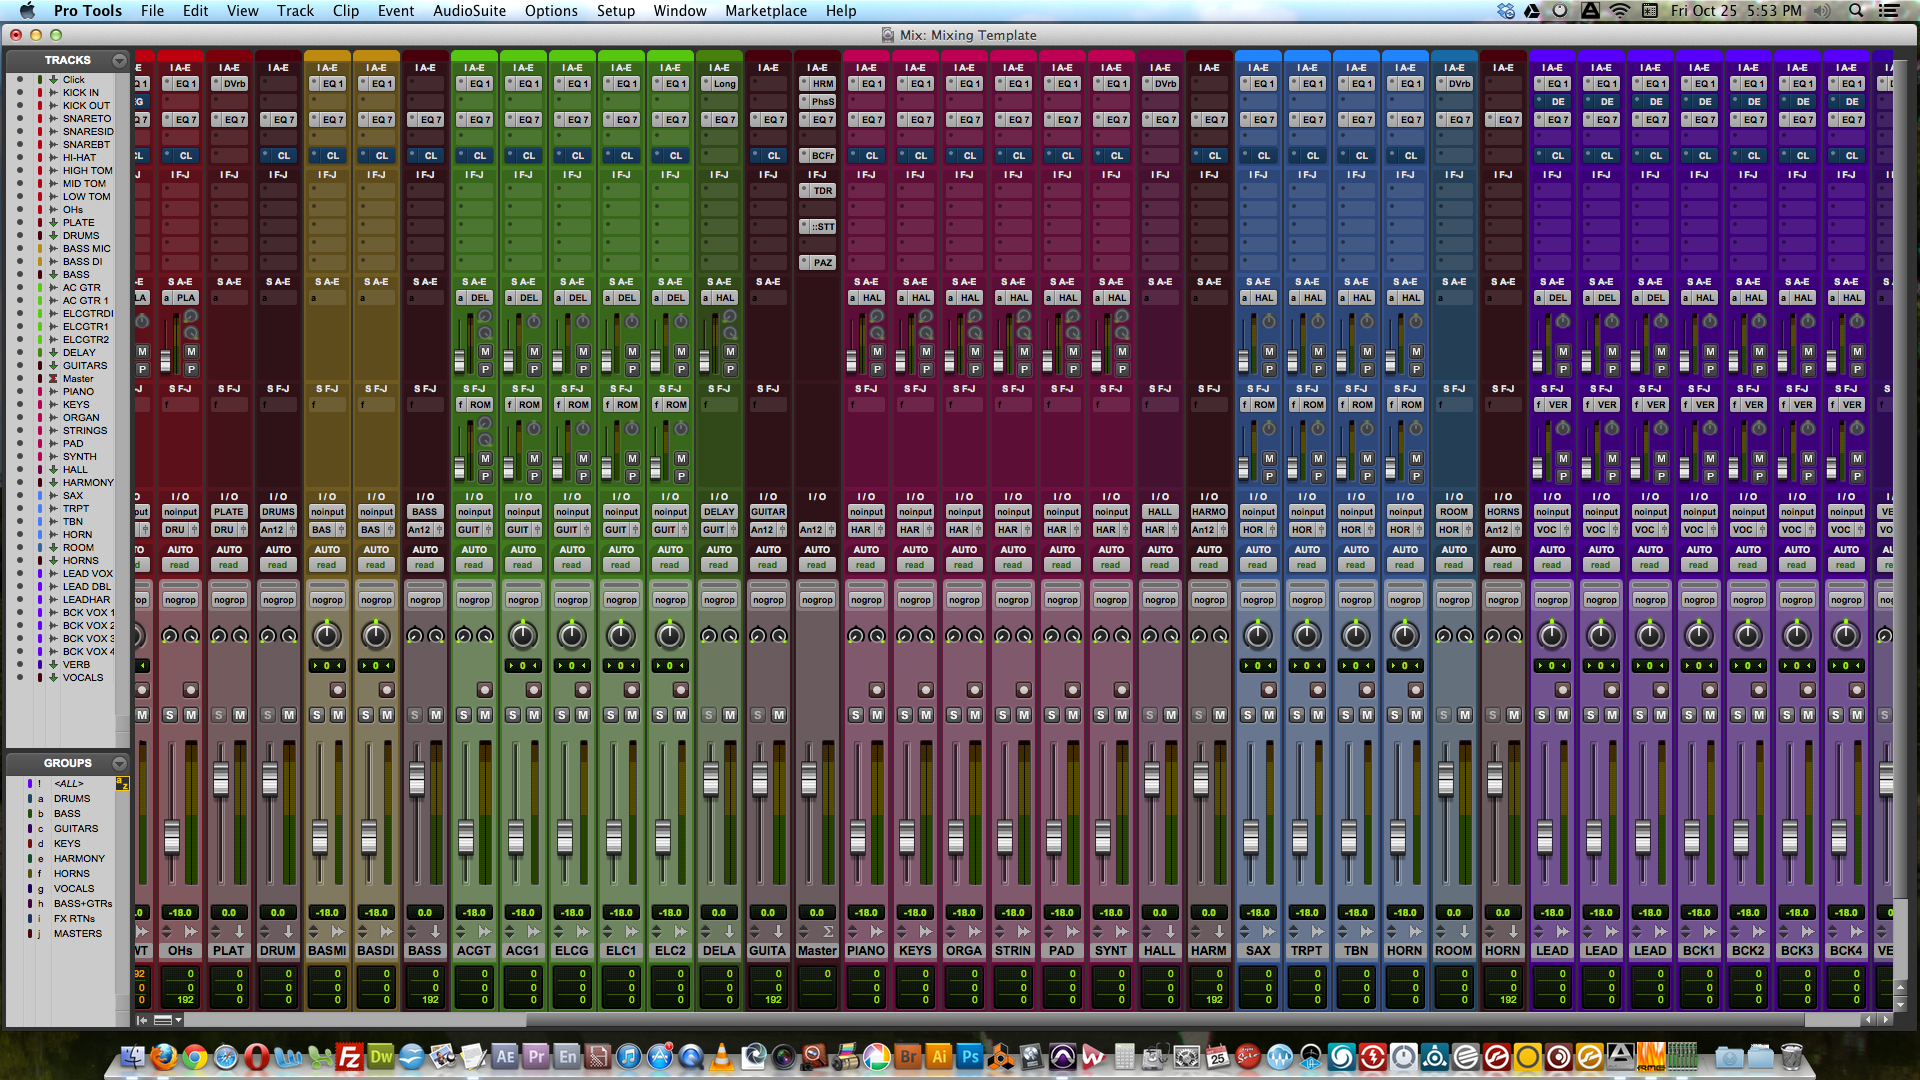 pro-tools-mixing-template-screen-shot.png